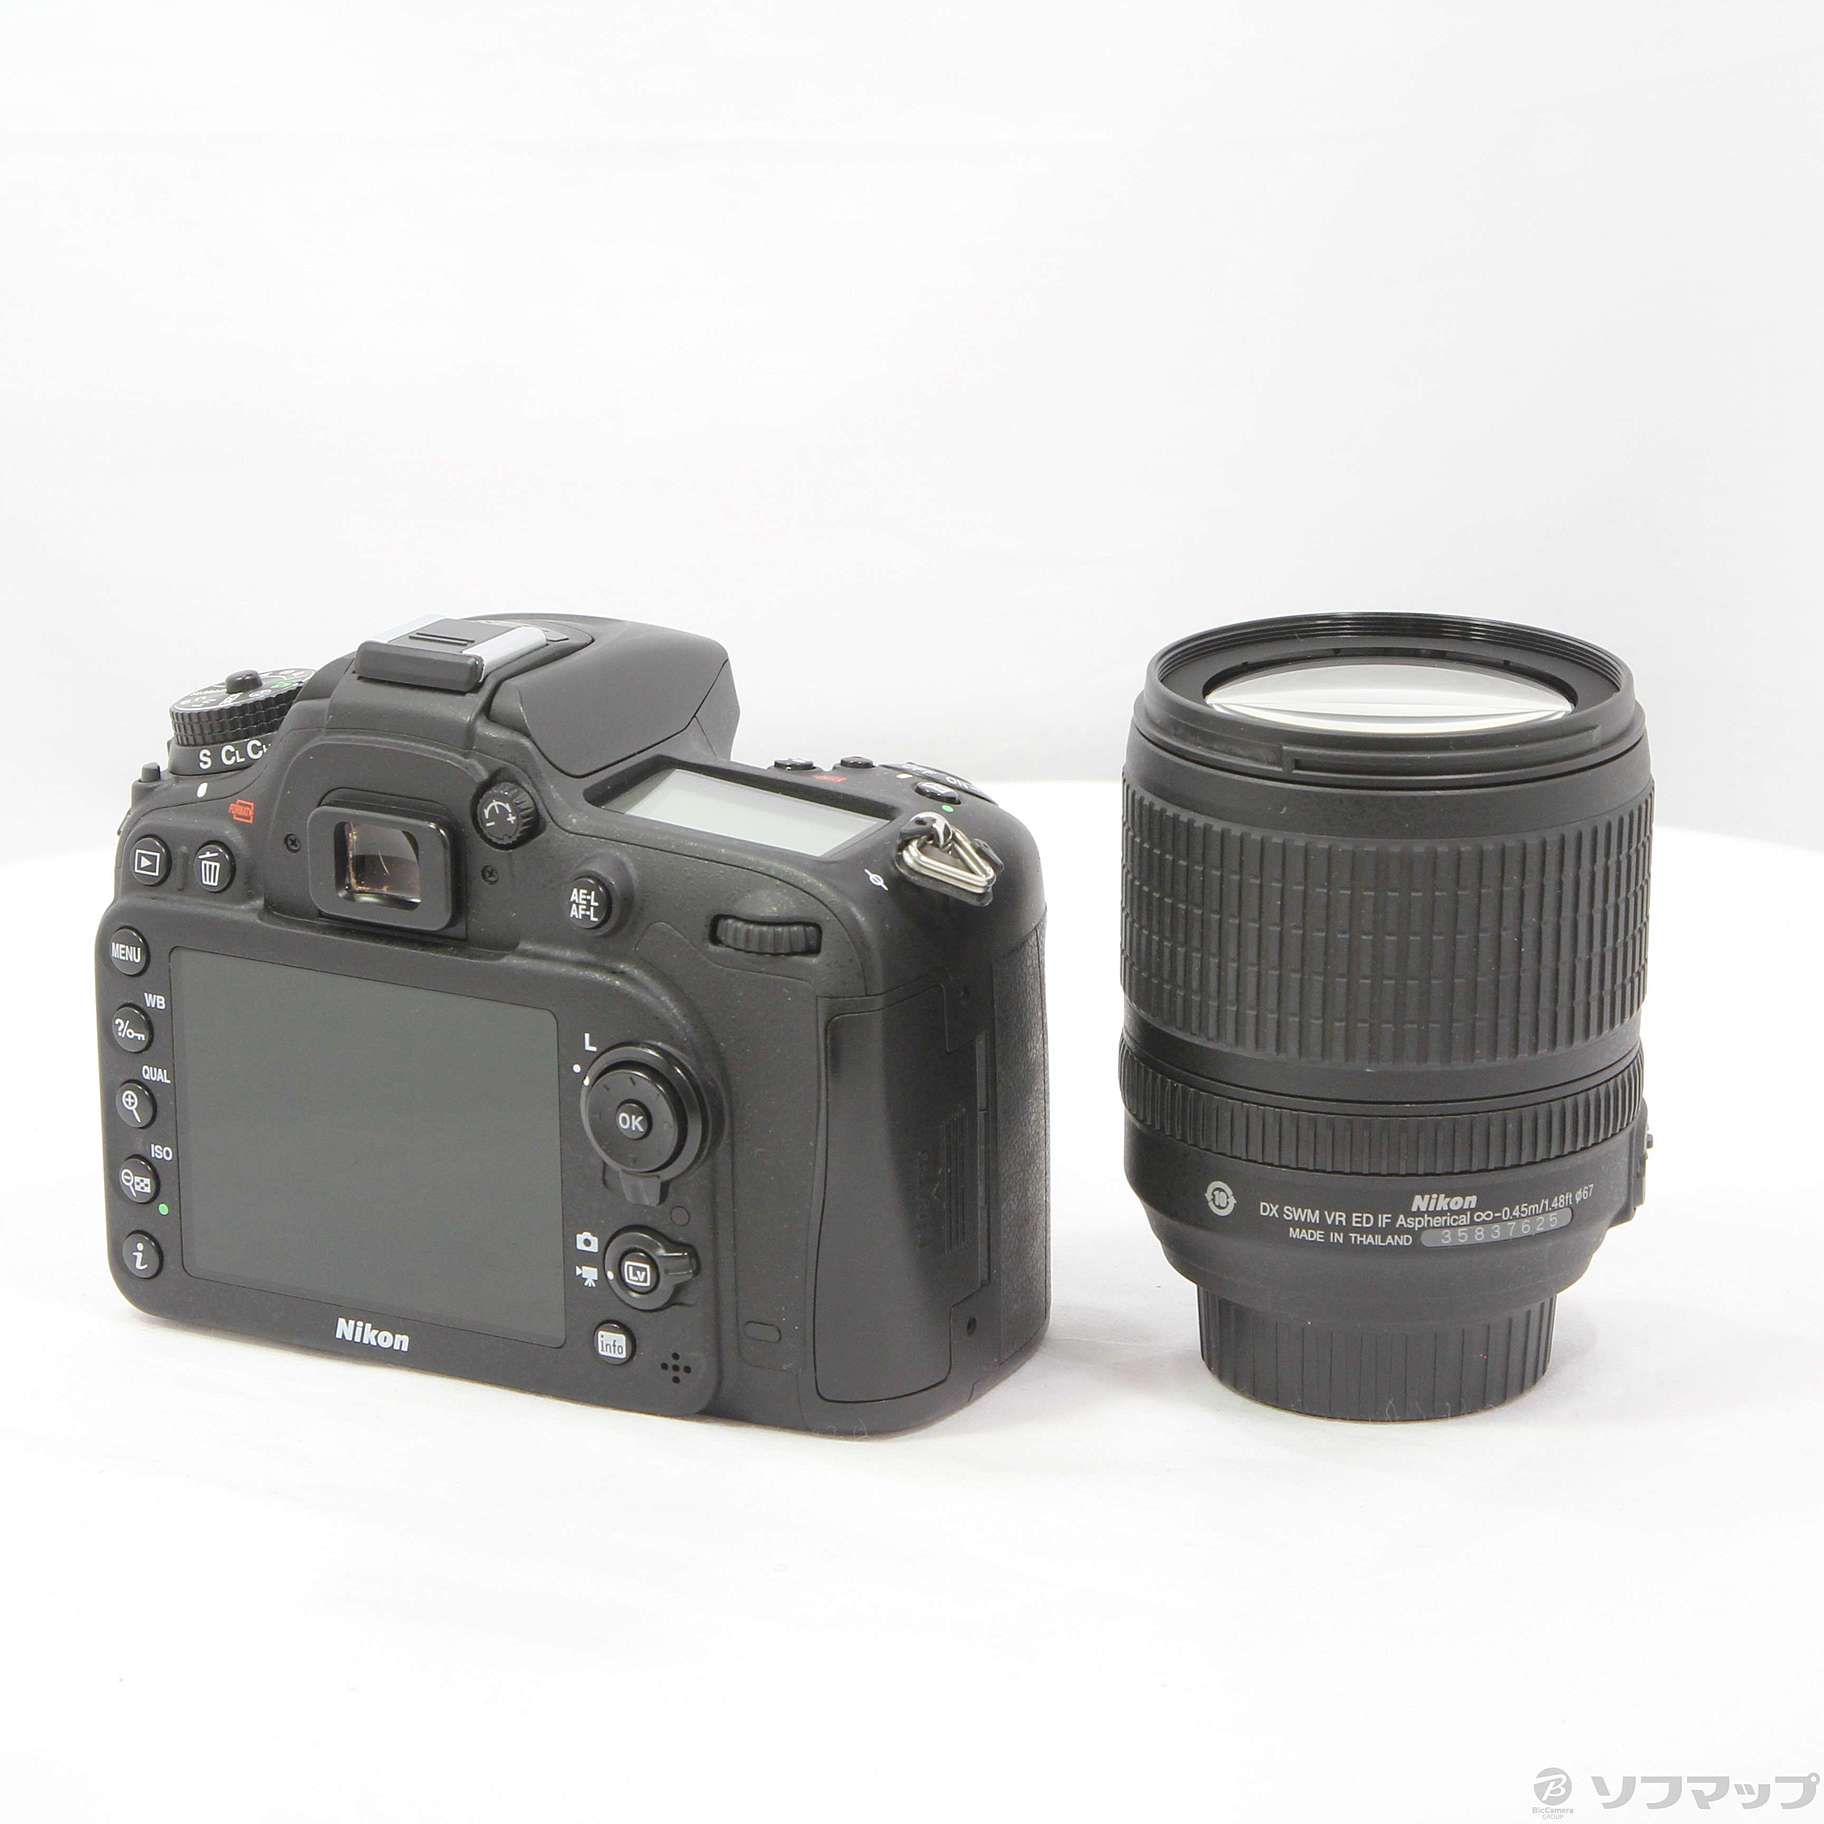 Nikon D7100 18-105 VR レンズキット (2410万画素／SDXC)